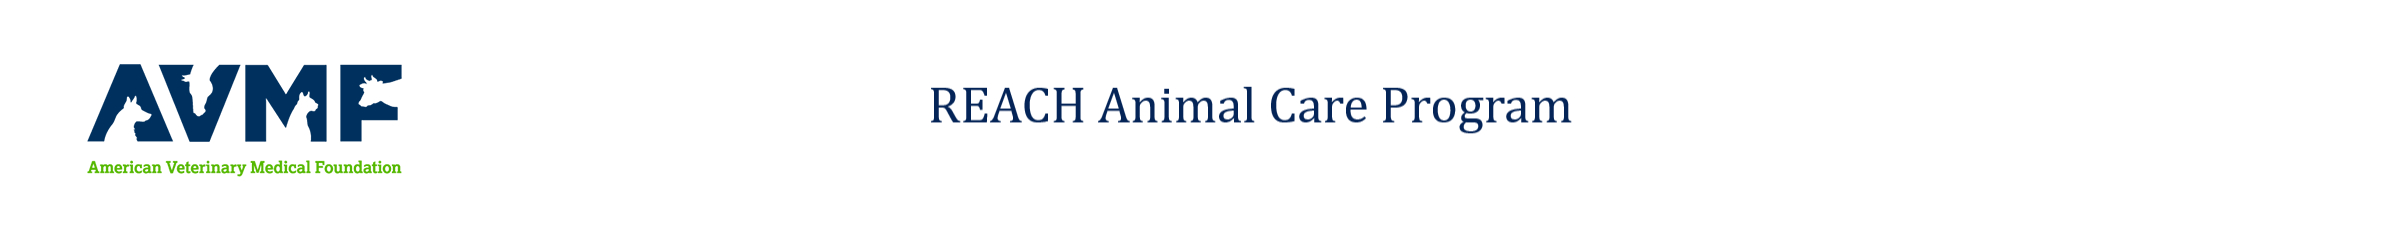 REACH Animal Care Program logo